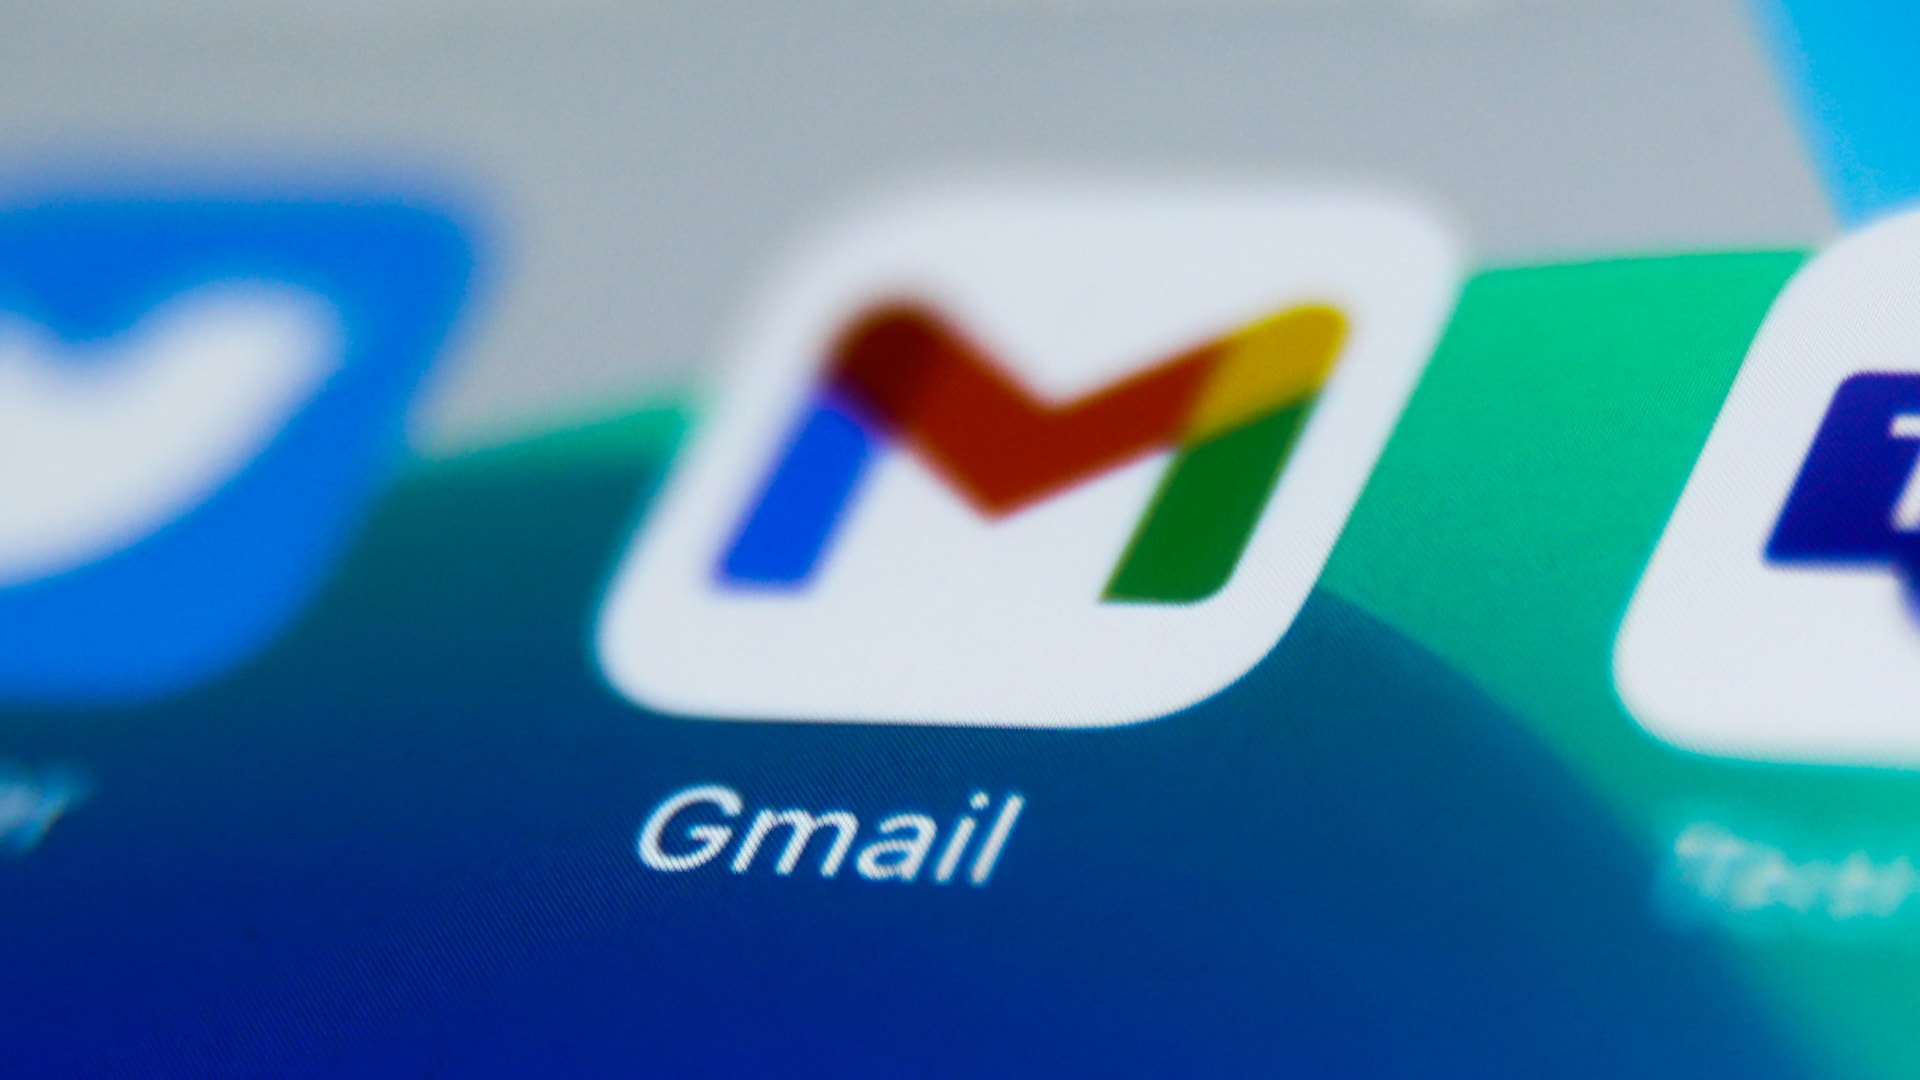 Google's Gmail app.